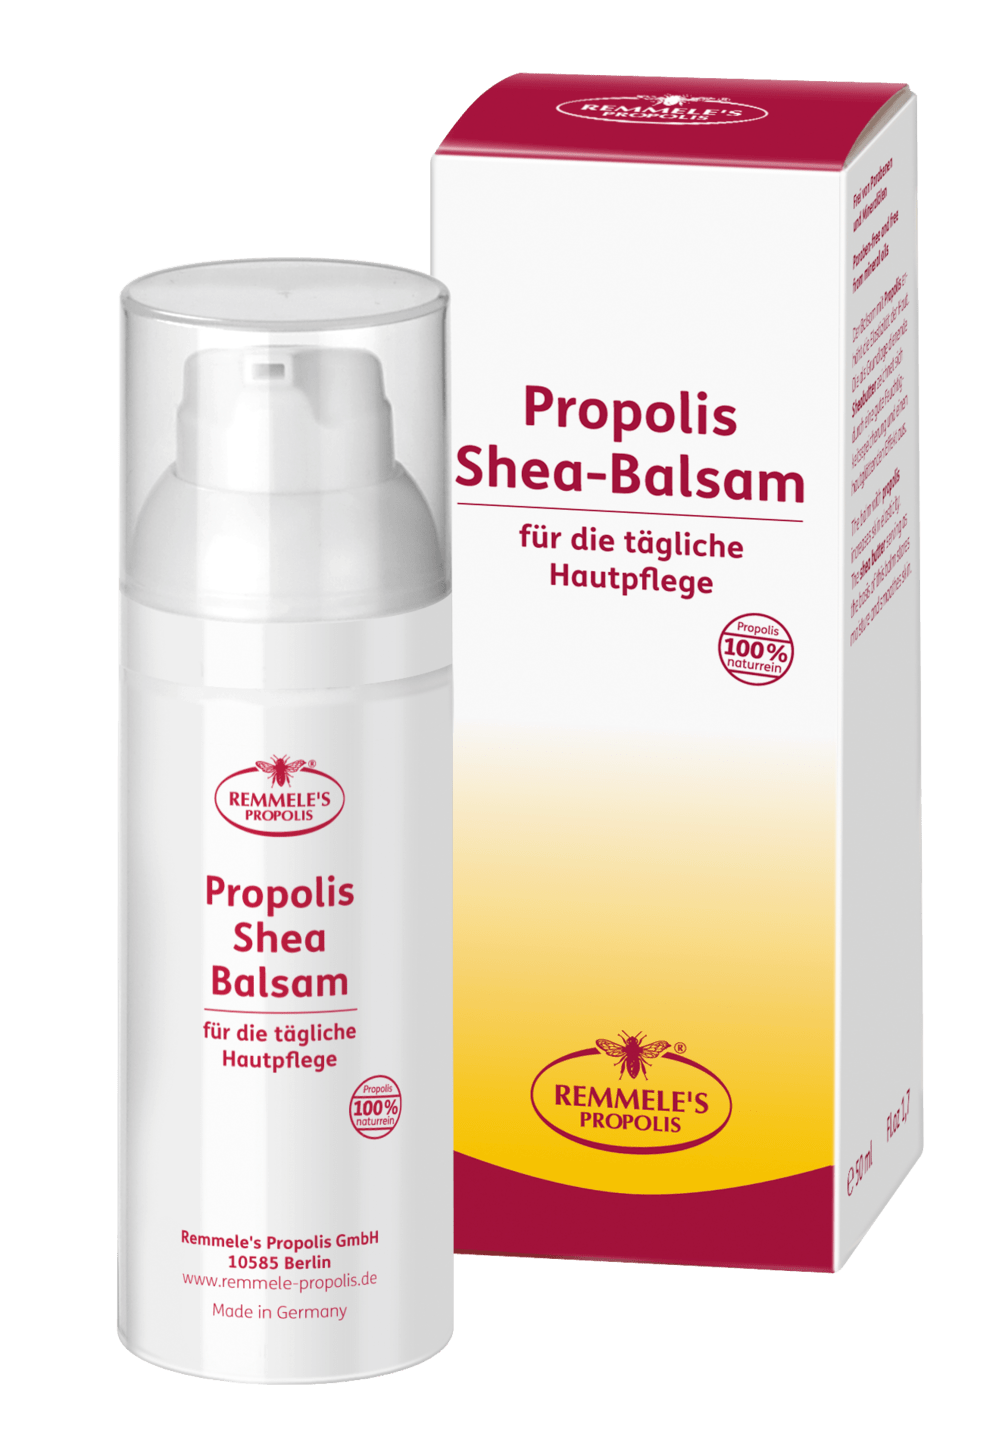 Remmele's Propolis - Propolis Shea-Balsam, 50 ml